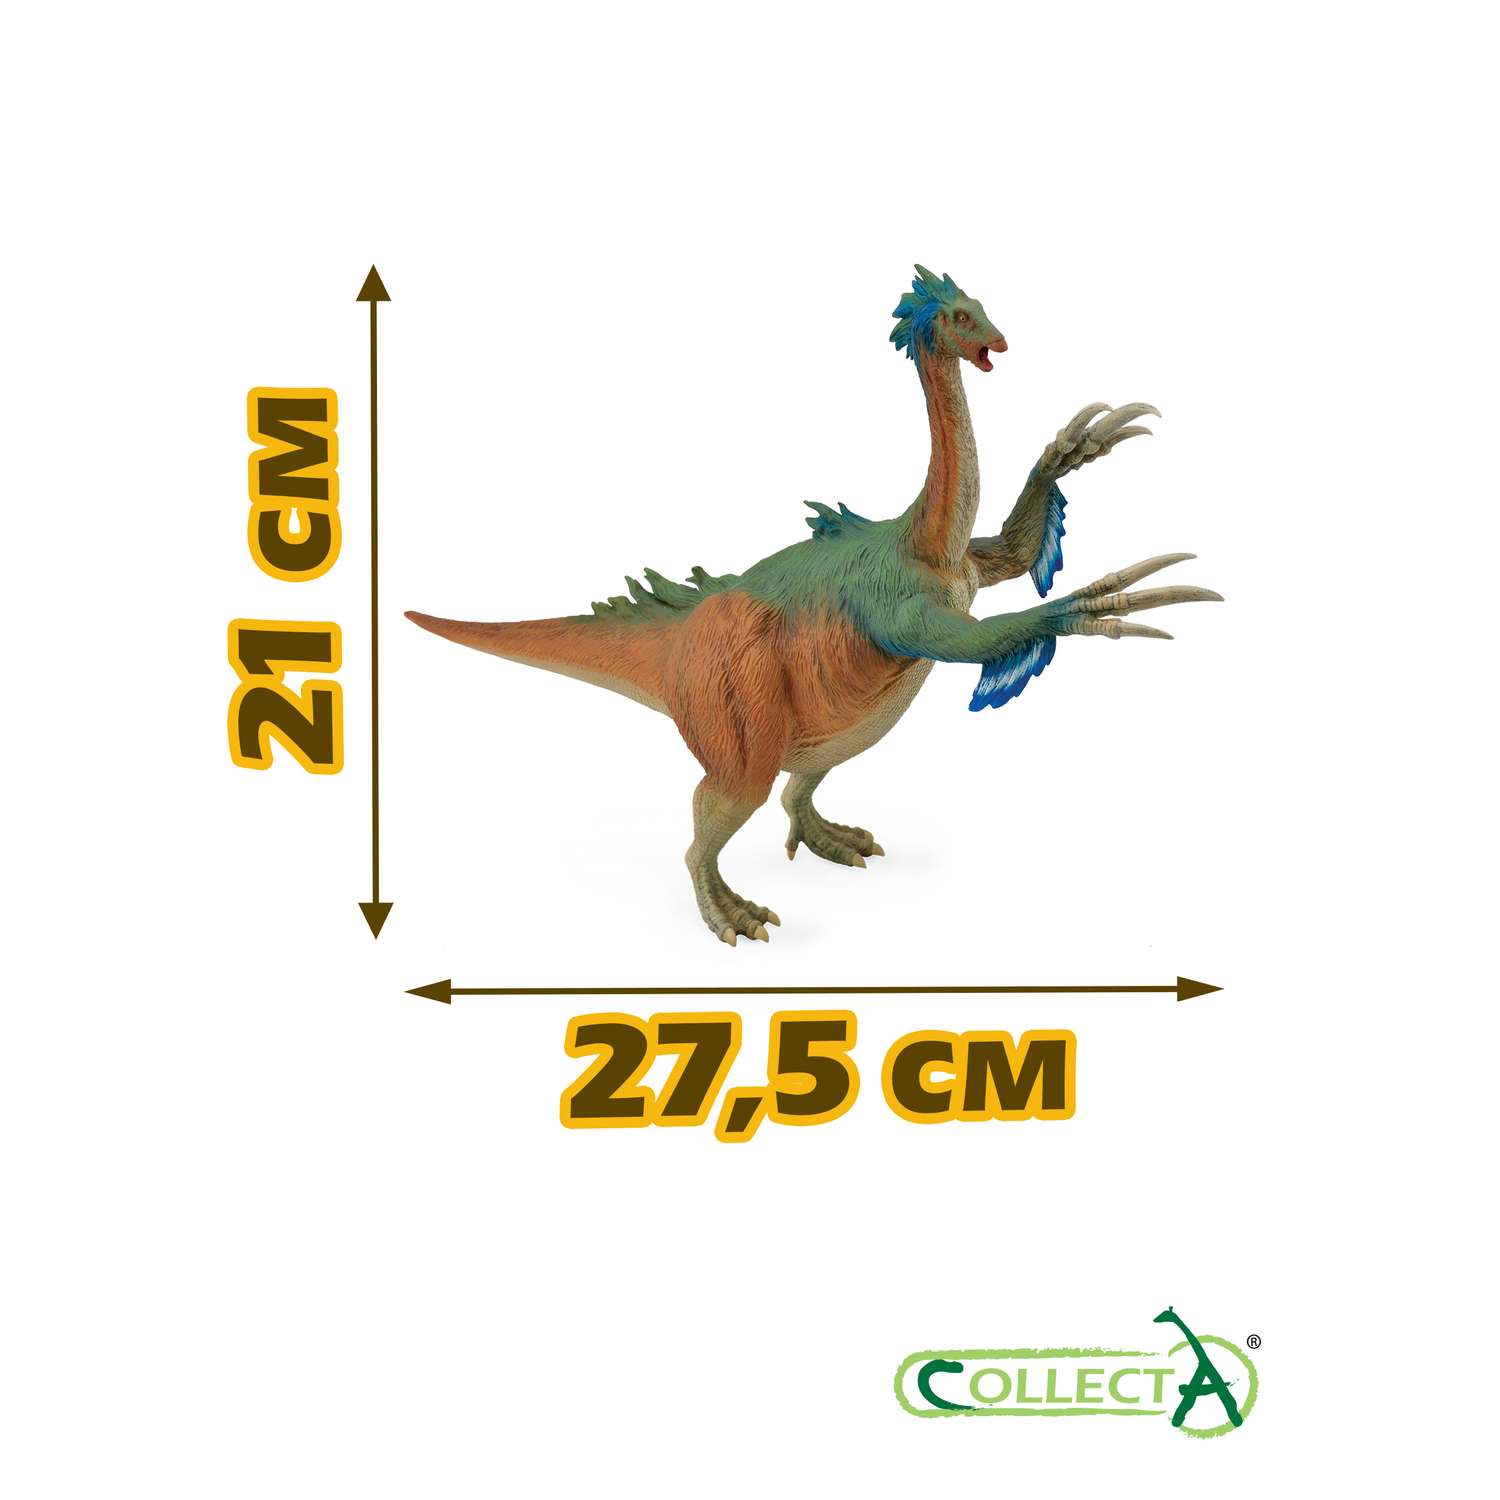 Игрушка Collecta Теризинозавров 1:40 фигурка динозавра - фото 2